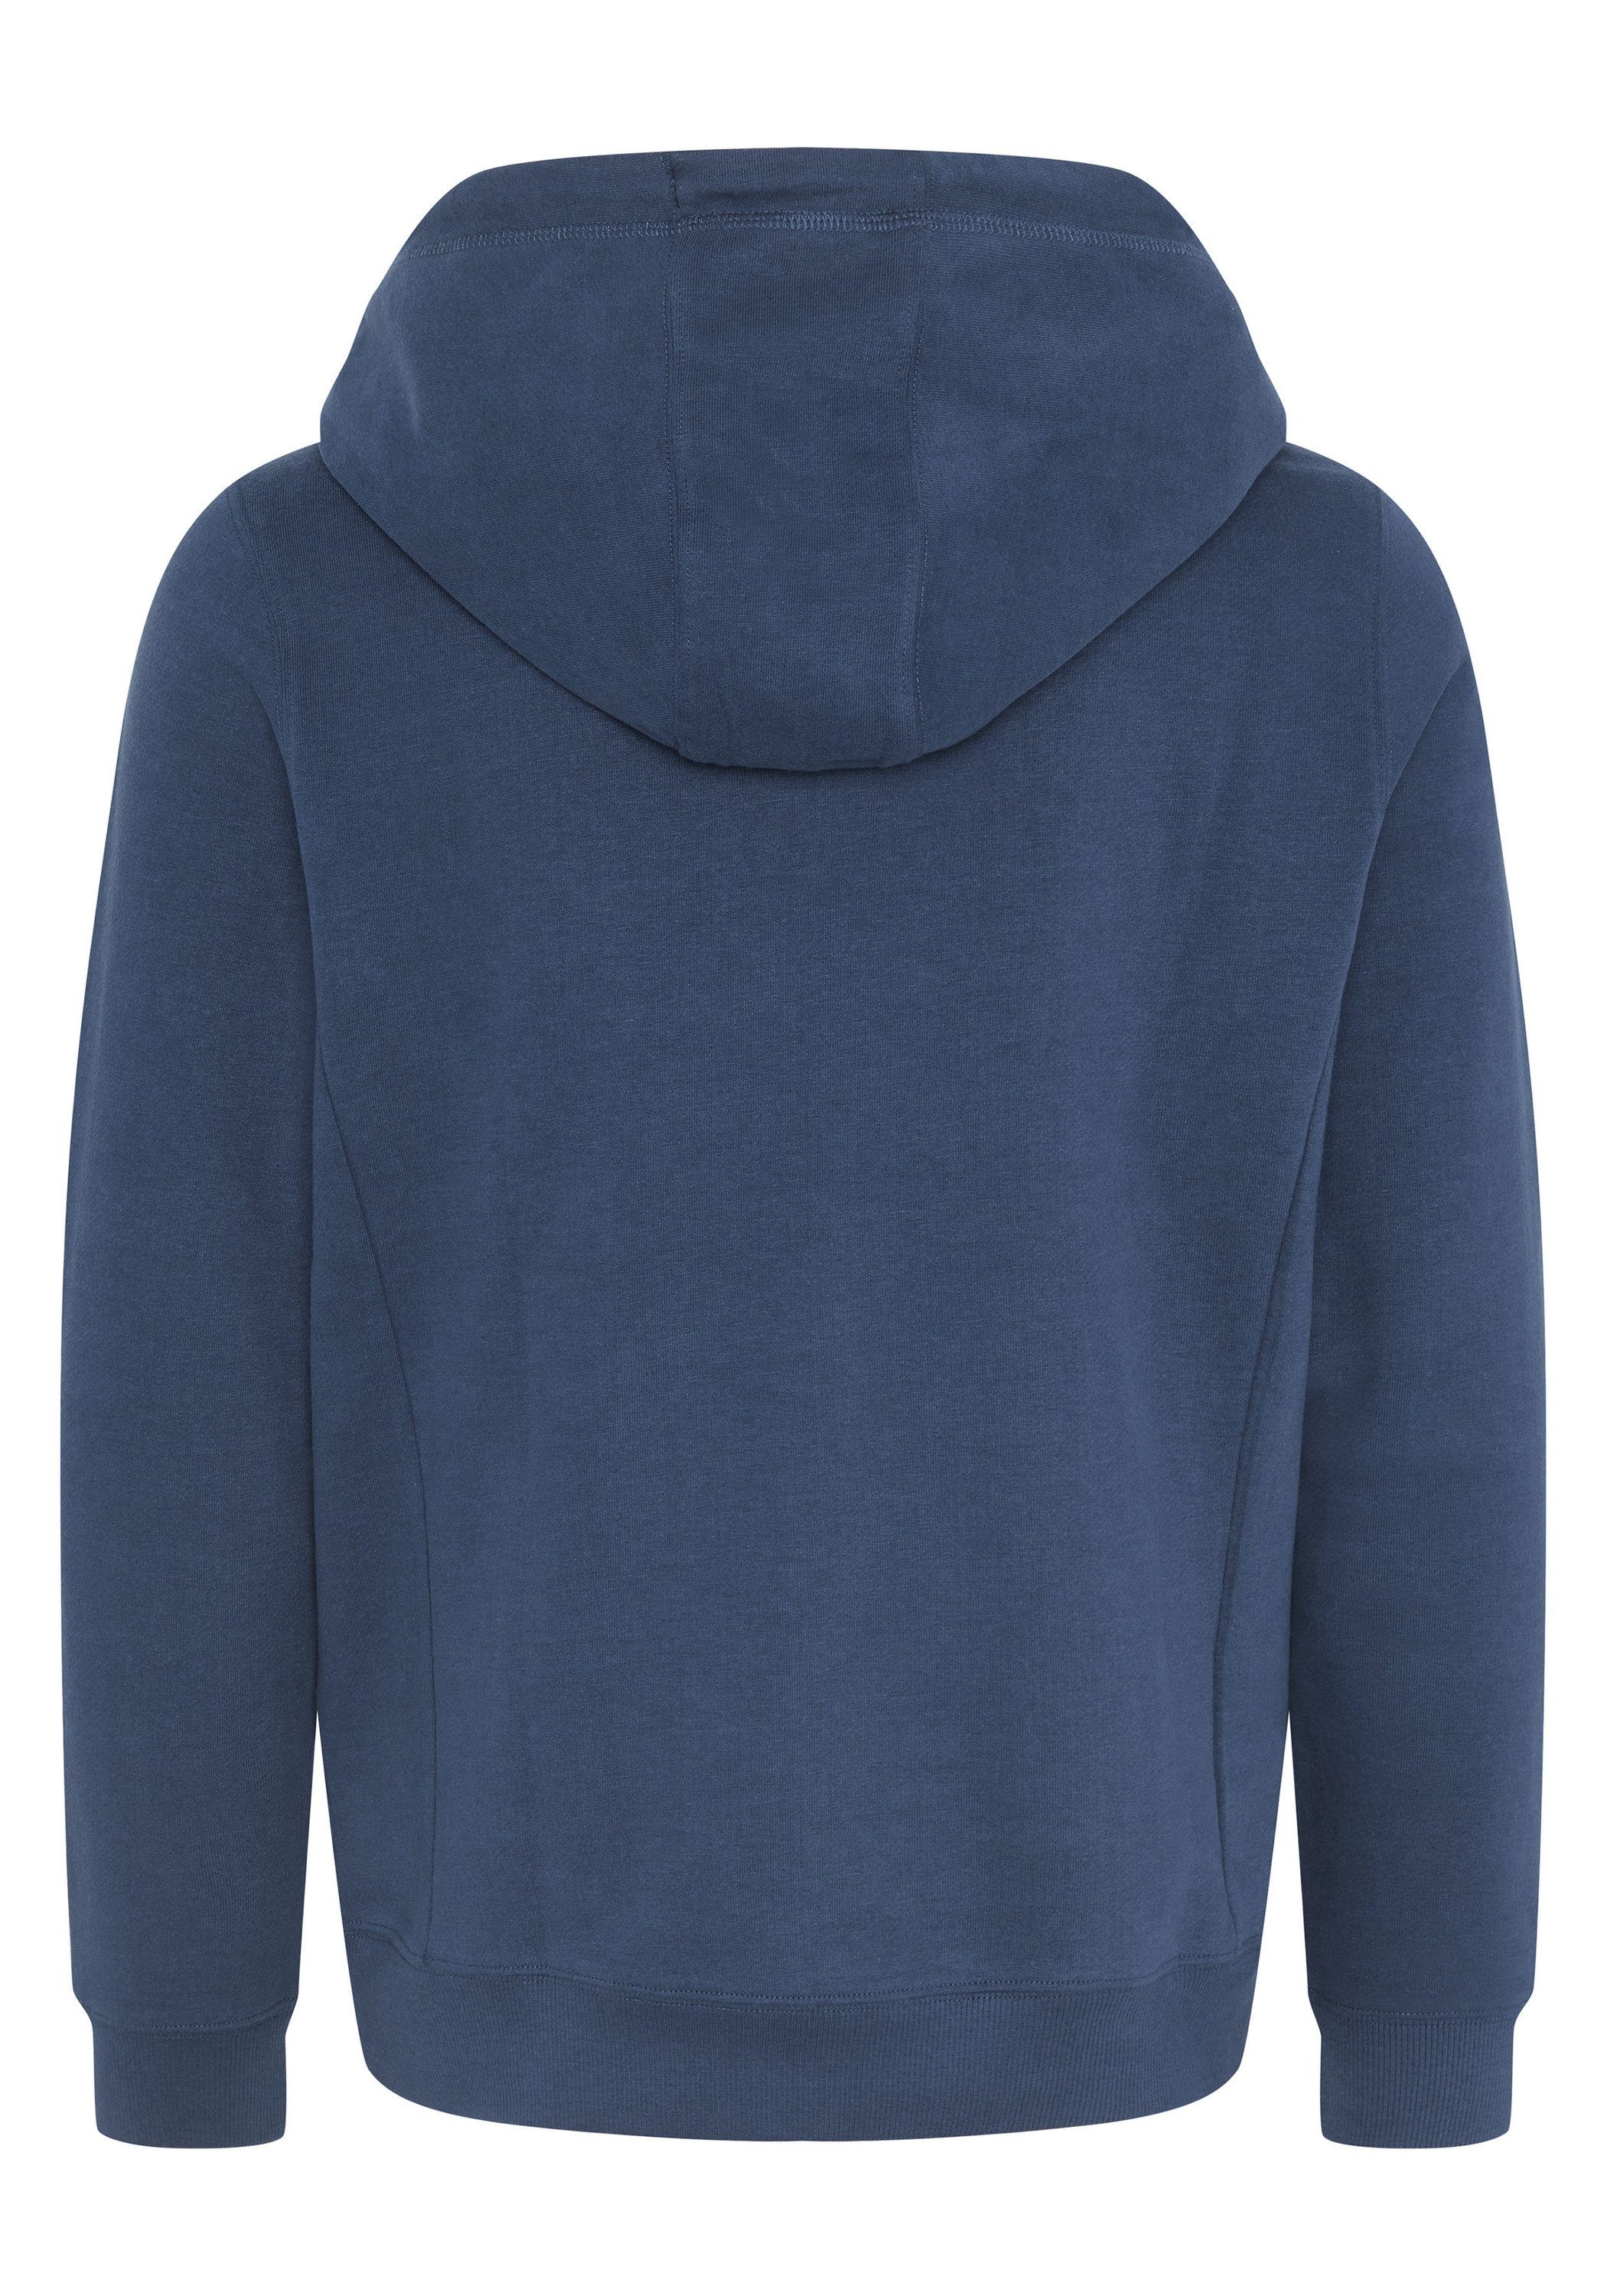 1 hohem mit Kapuzensweatshirt Chiemsee dunkel Sweatshirt Kapuzenkragen blau